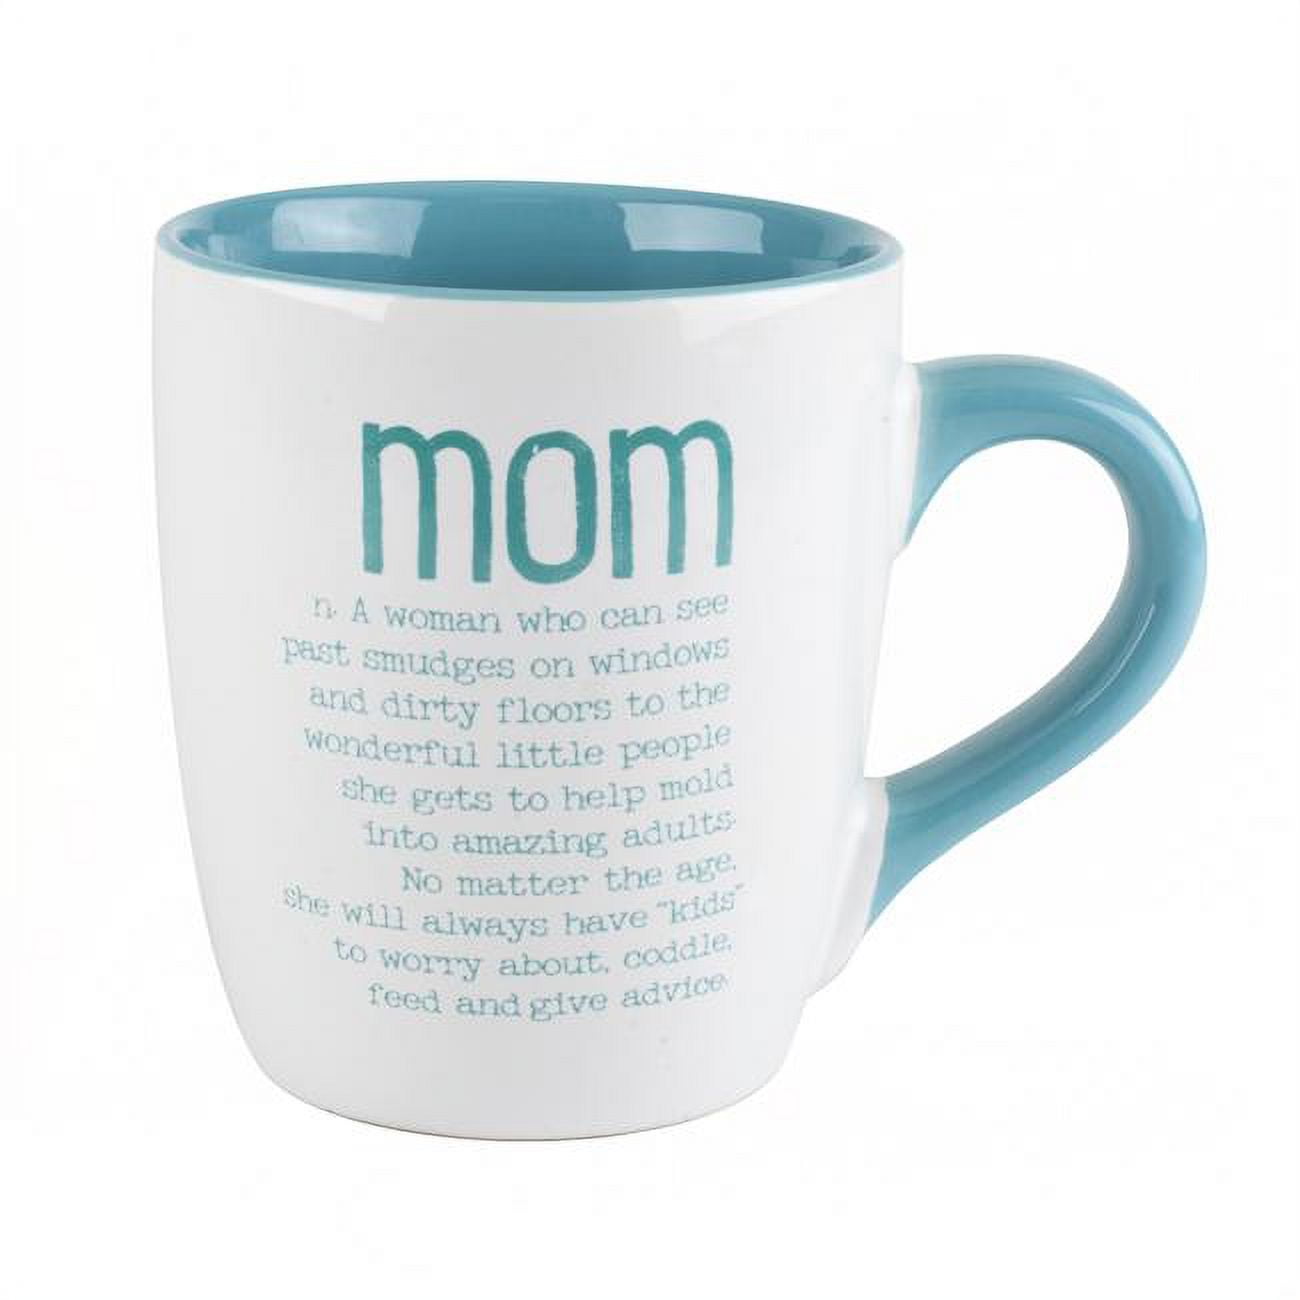 Fruit Filled Mug for Mom™